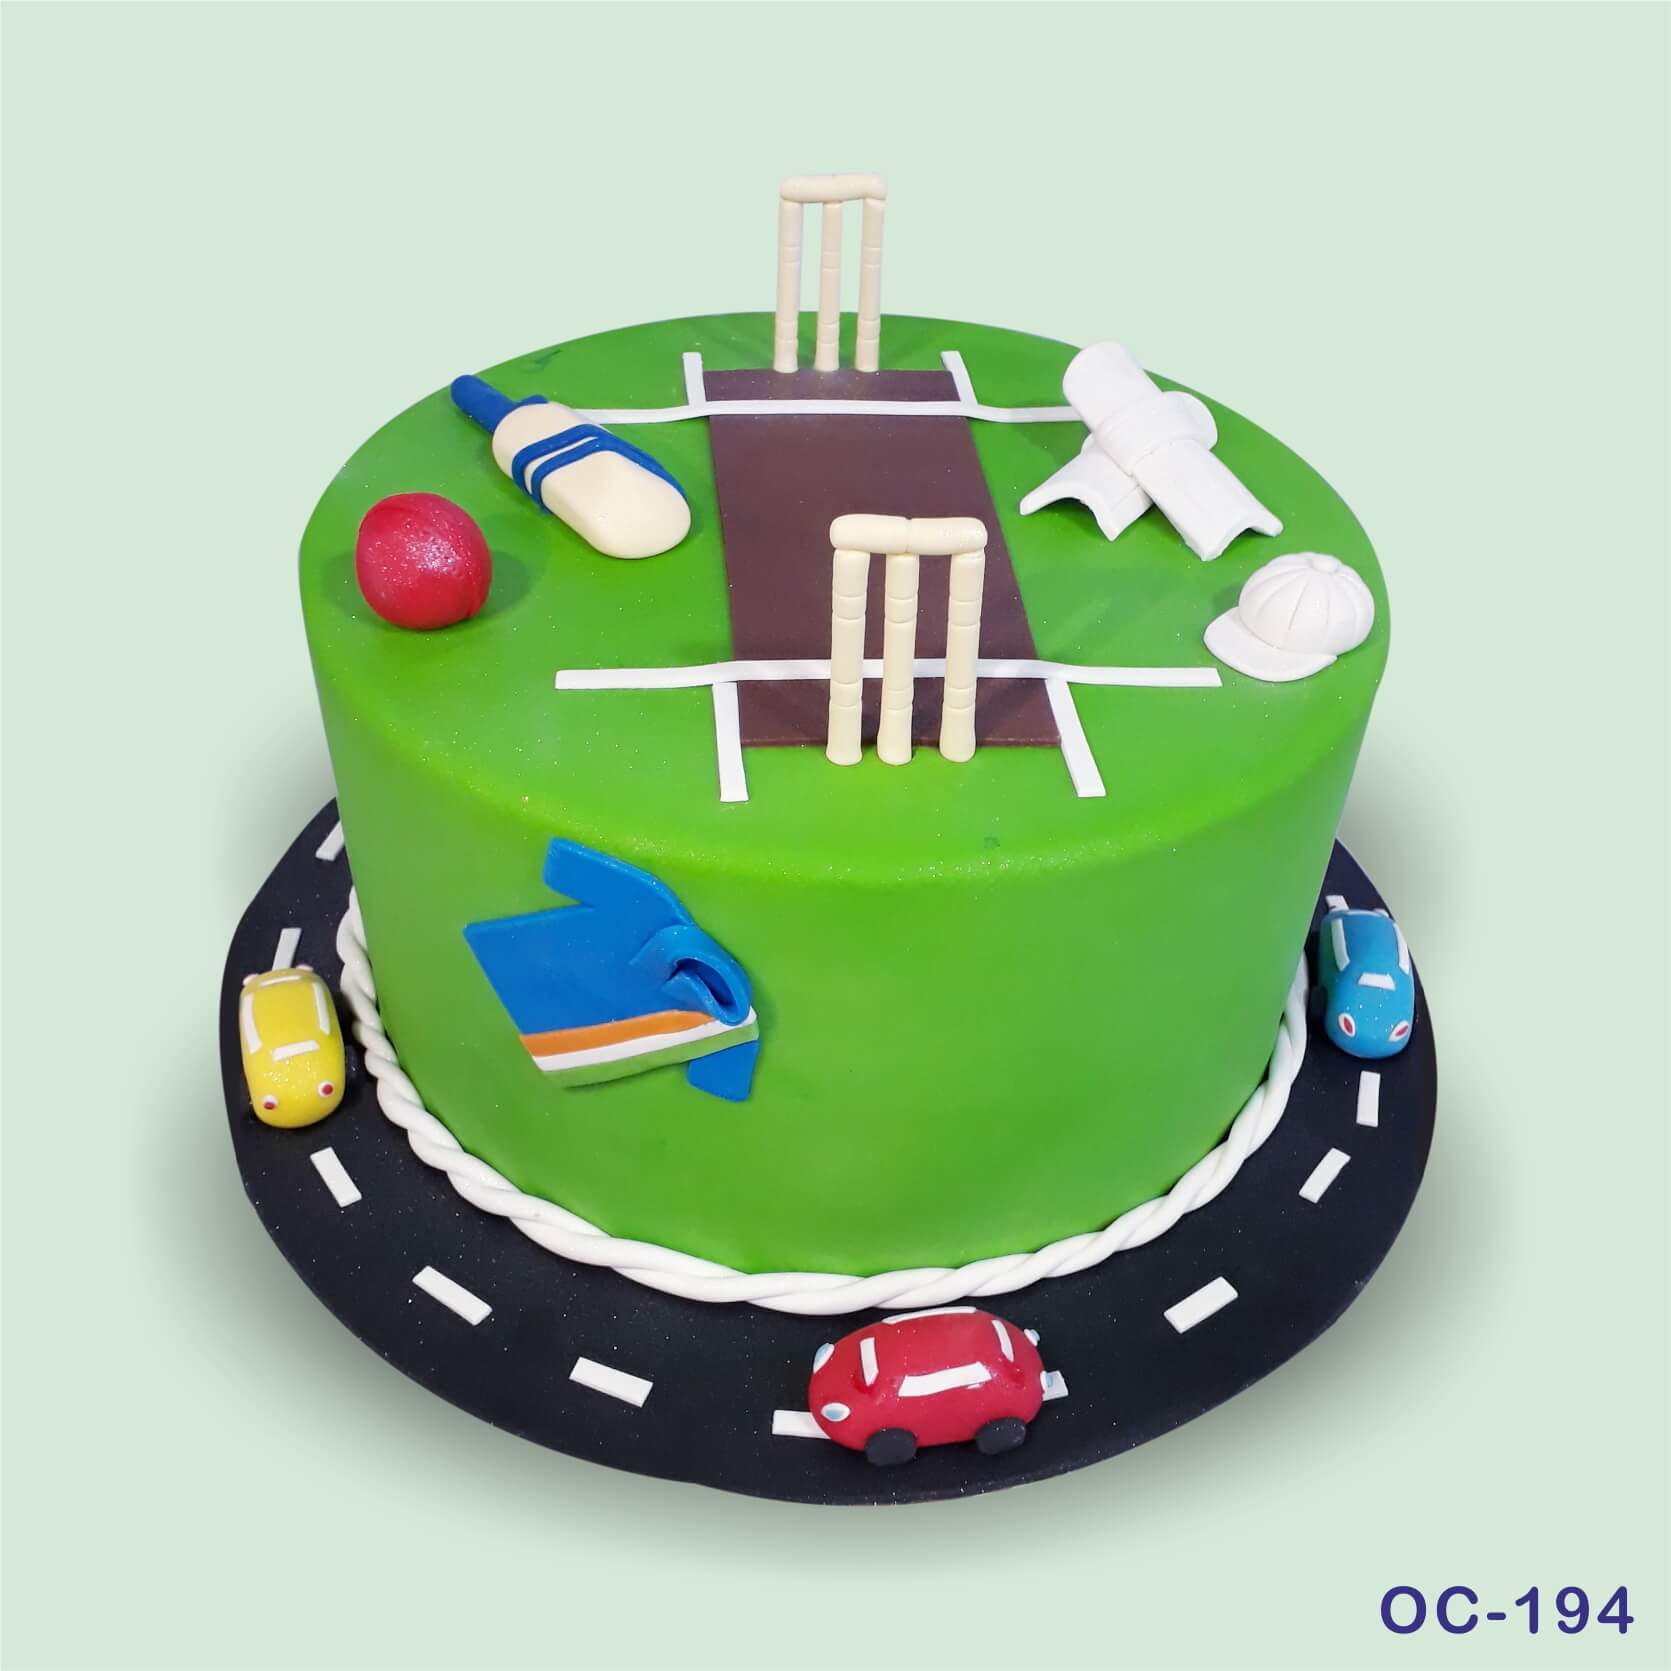 Cricket cake 5